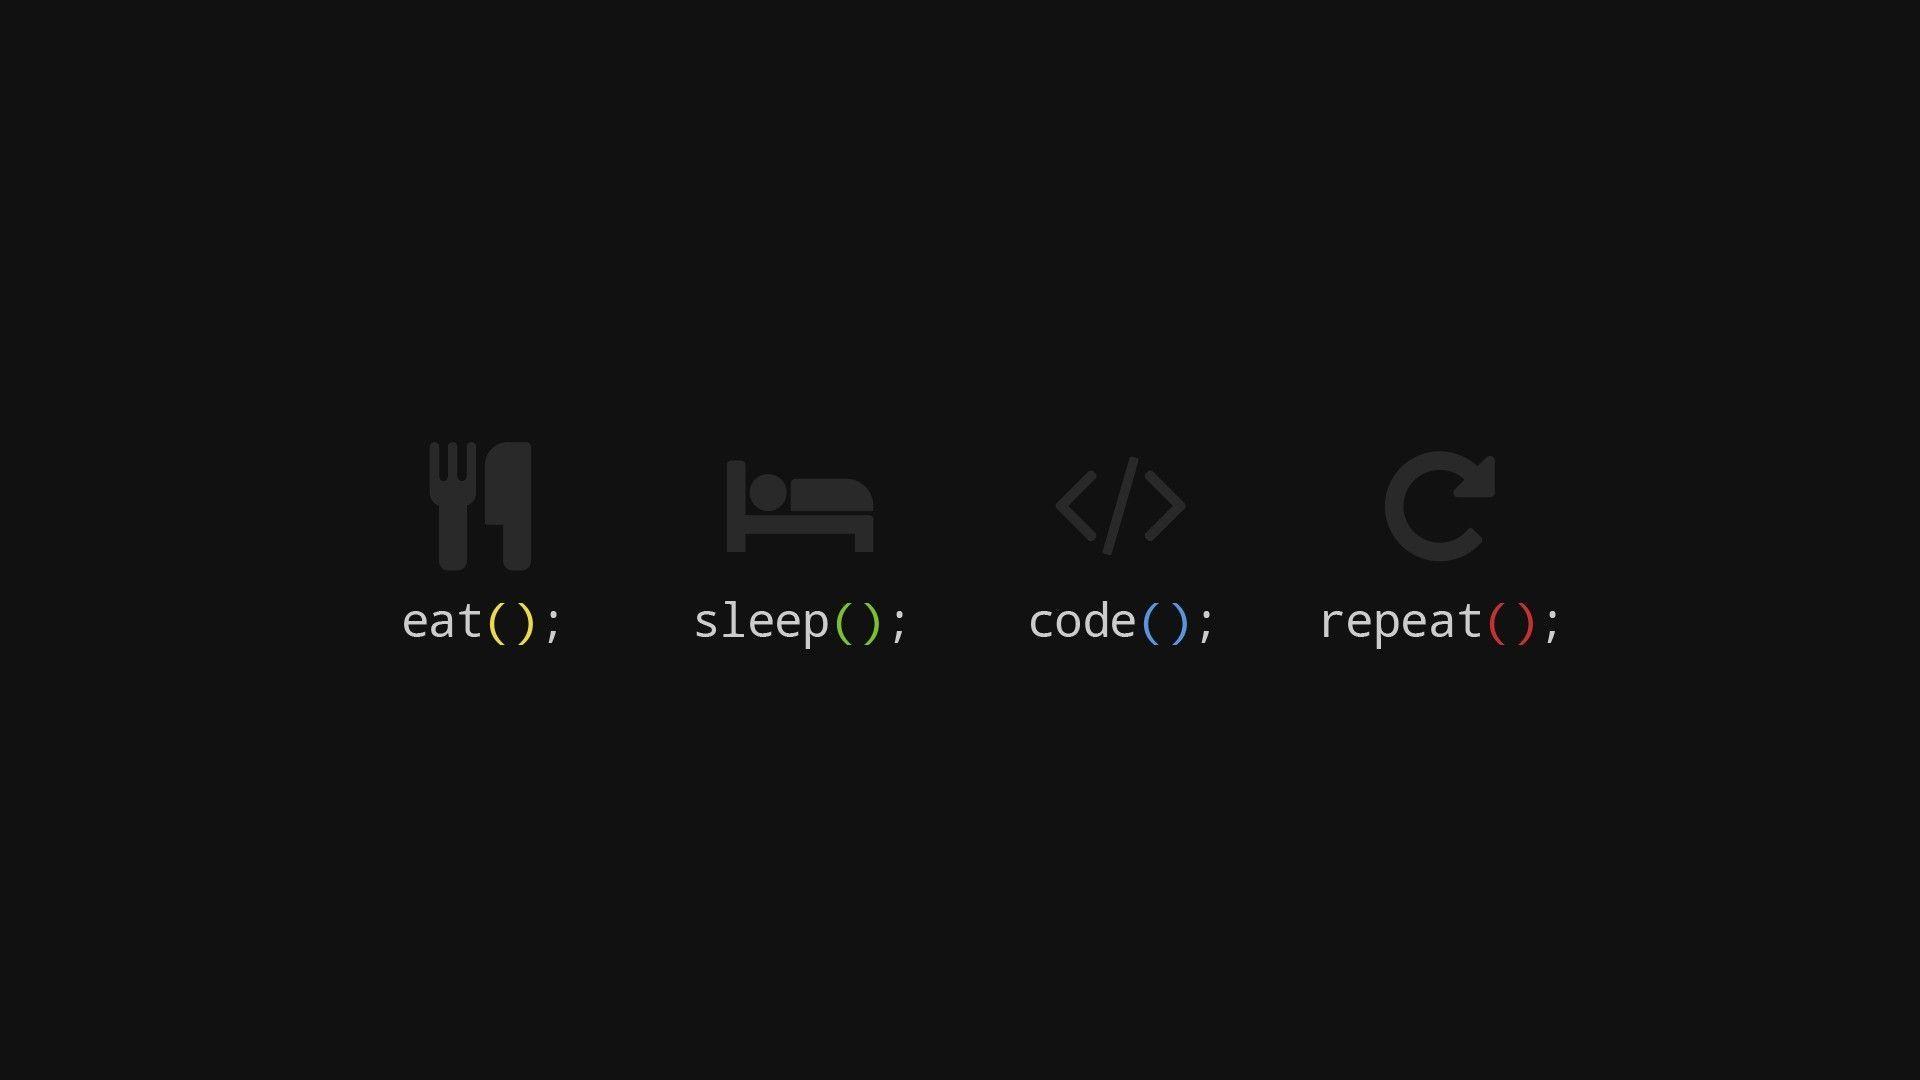 General 1920x1080 programming code minimalism